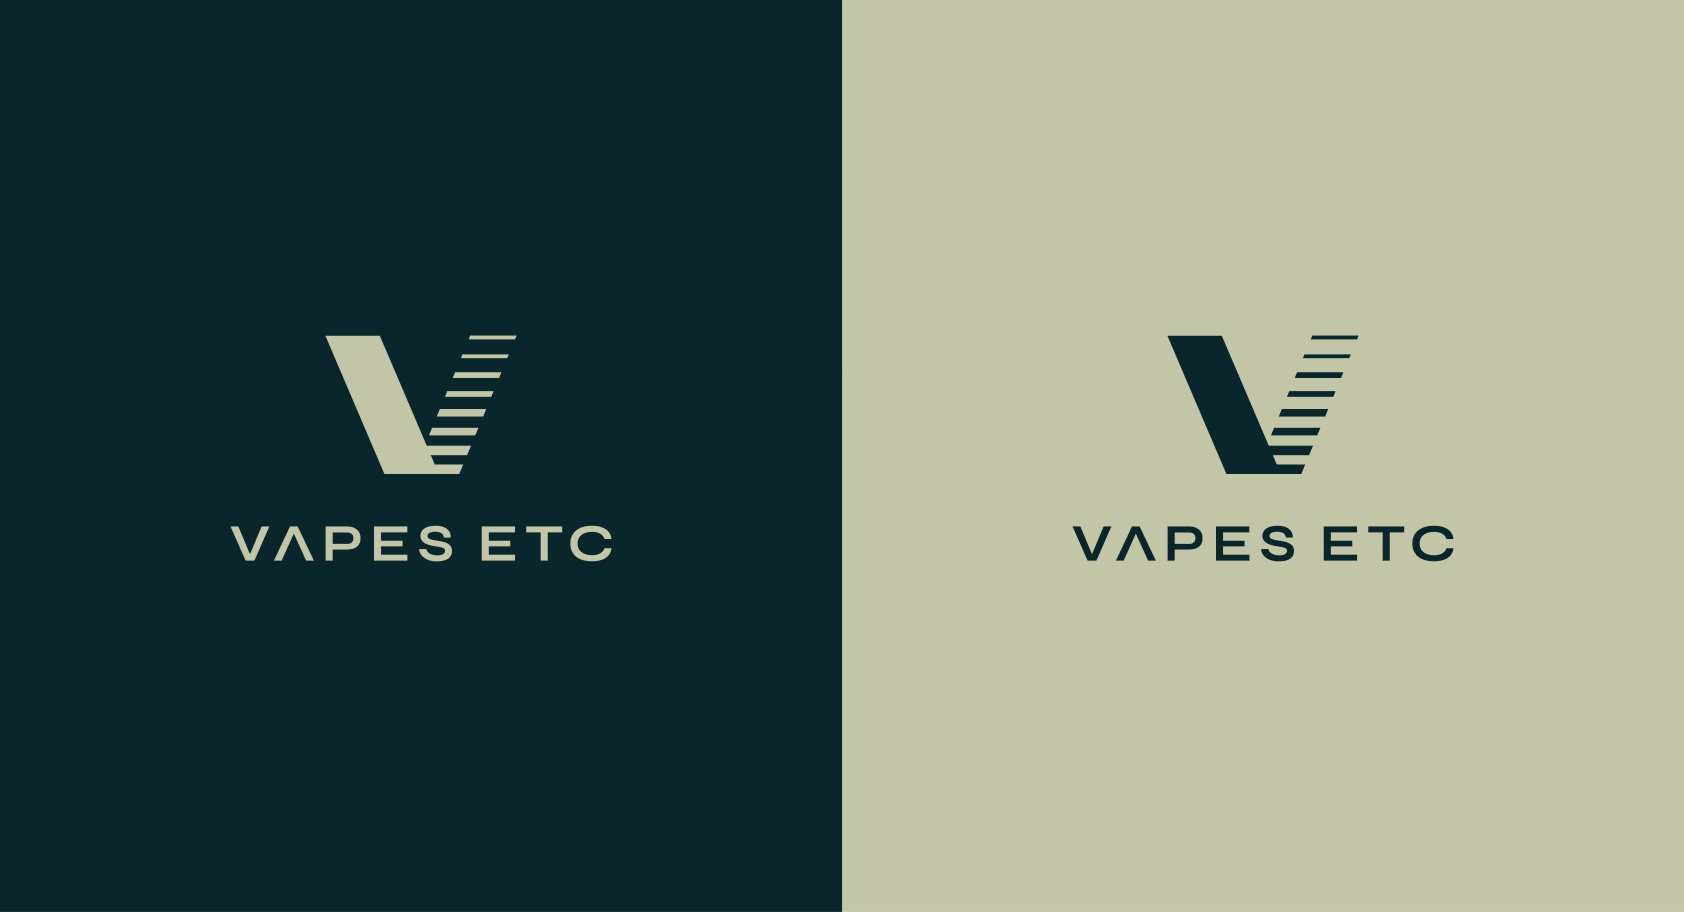 Vapes etc brand logo design